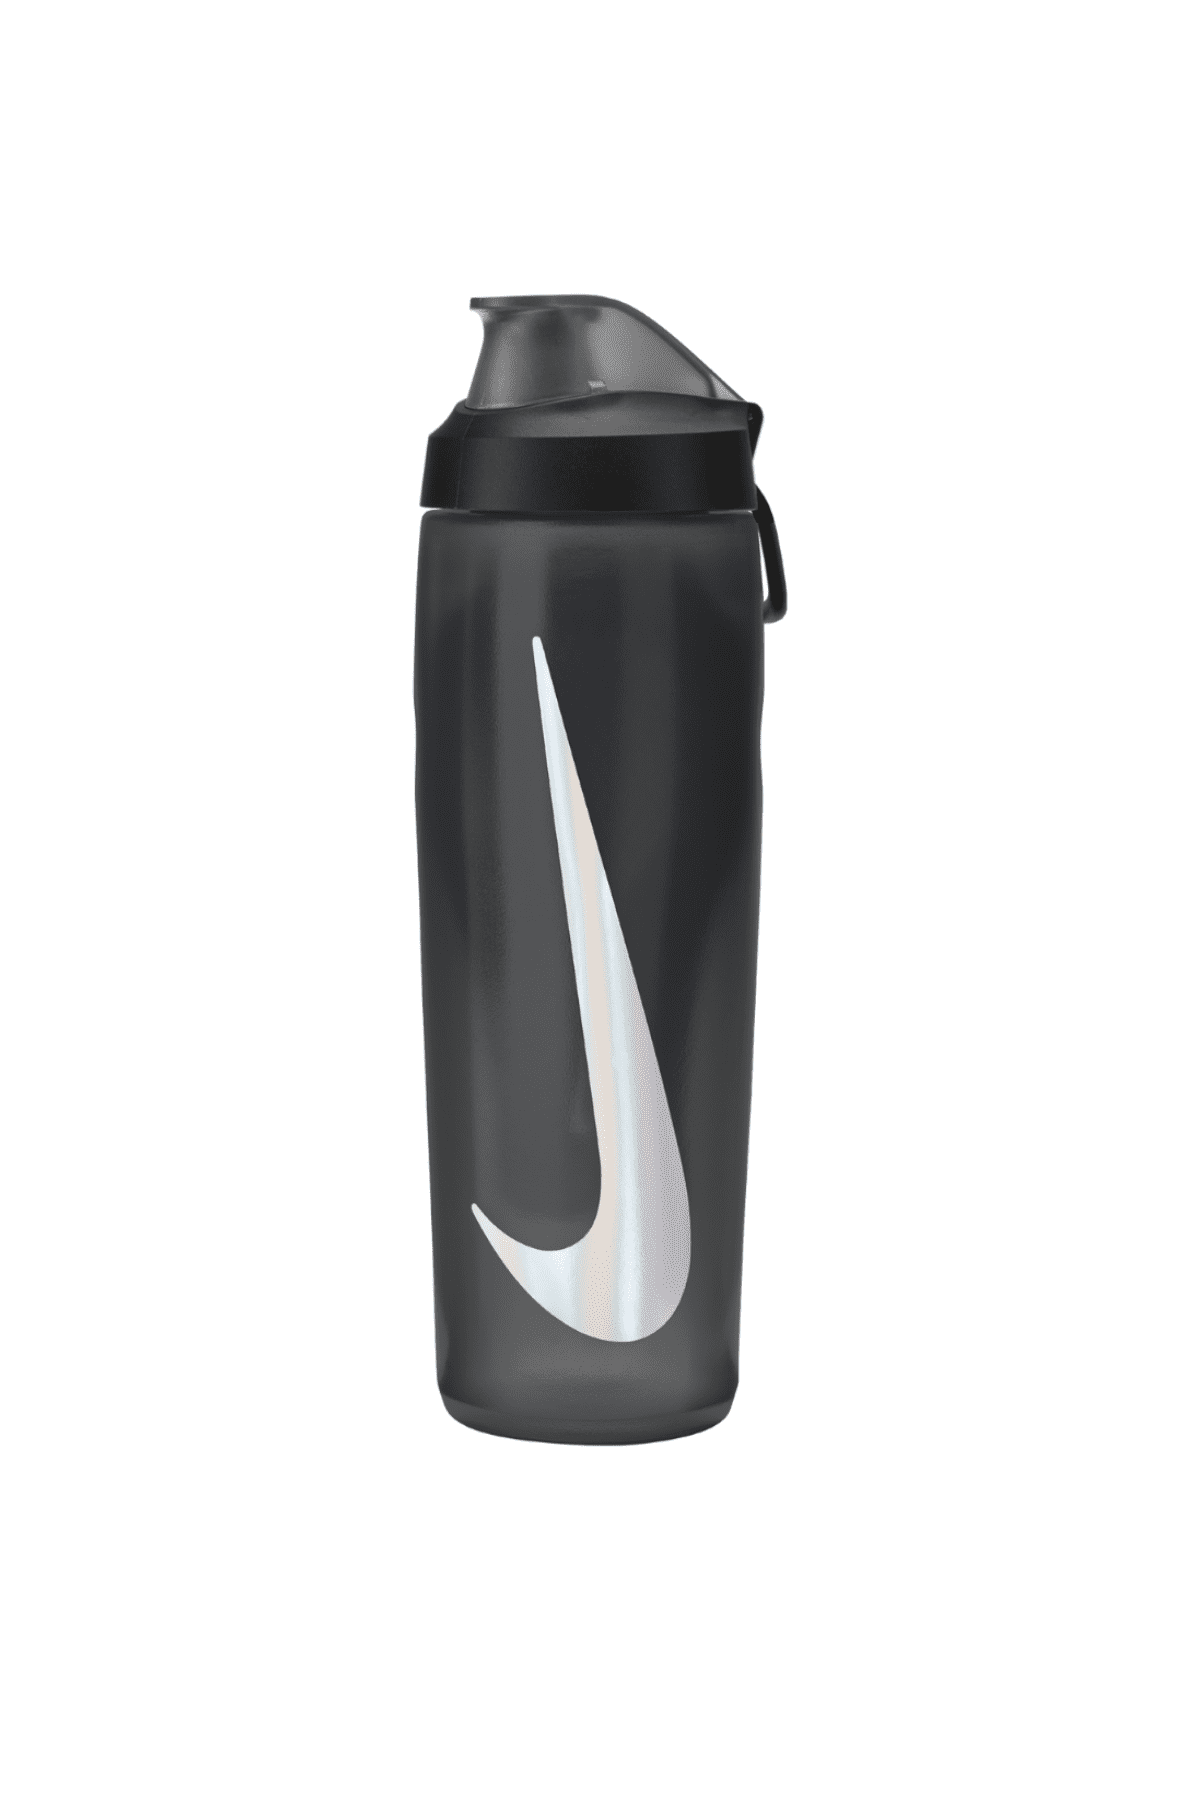 NIKE REFUEL בקבוק מים - בקבוק ספורט עם מכסה נייק 700 מ"ל שחור-Nike-One size-נאקו